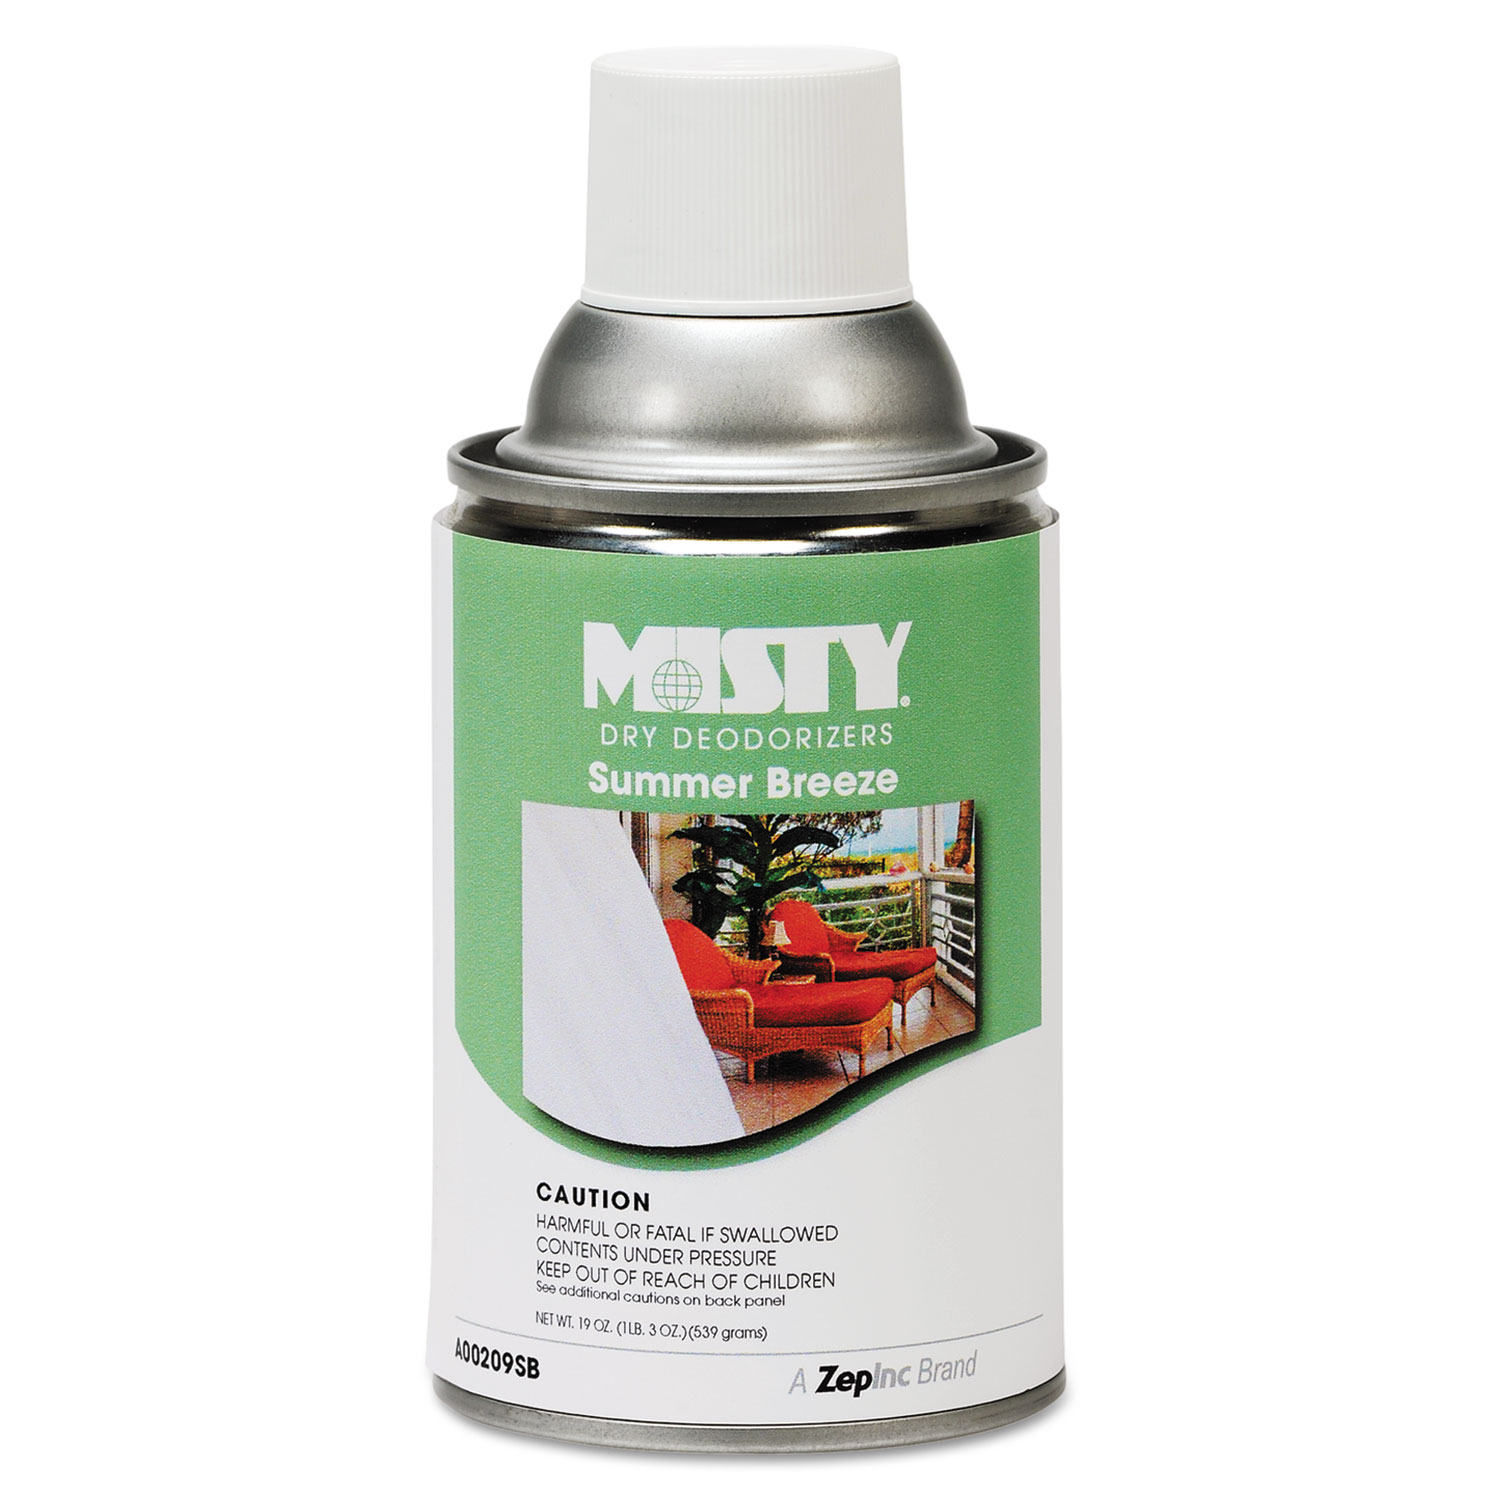  Misty 1015013 Metered Dry Deodorizer Refills, Summer Breeze, 7 oz Aerosol, 12/Carton (AMR1015013) 